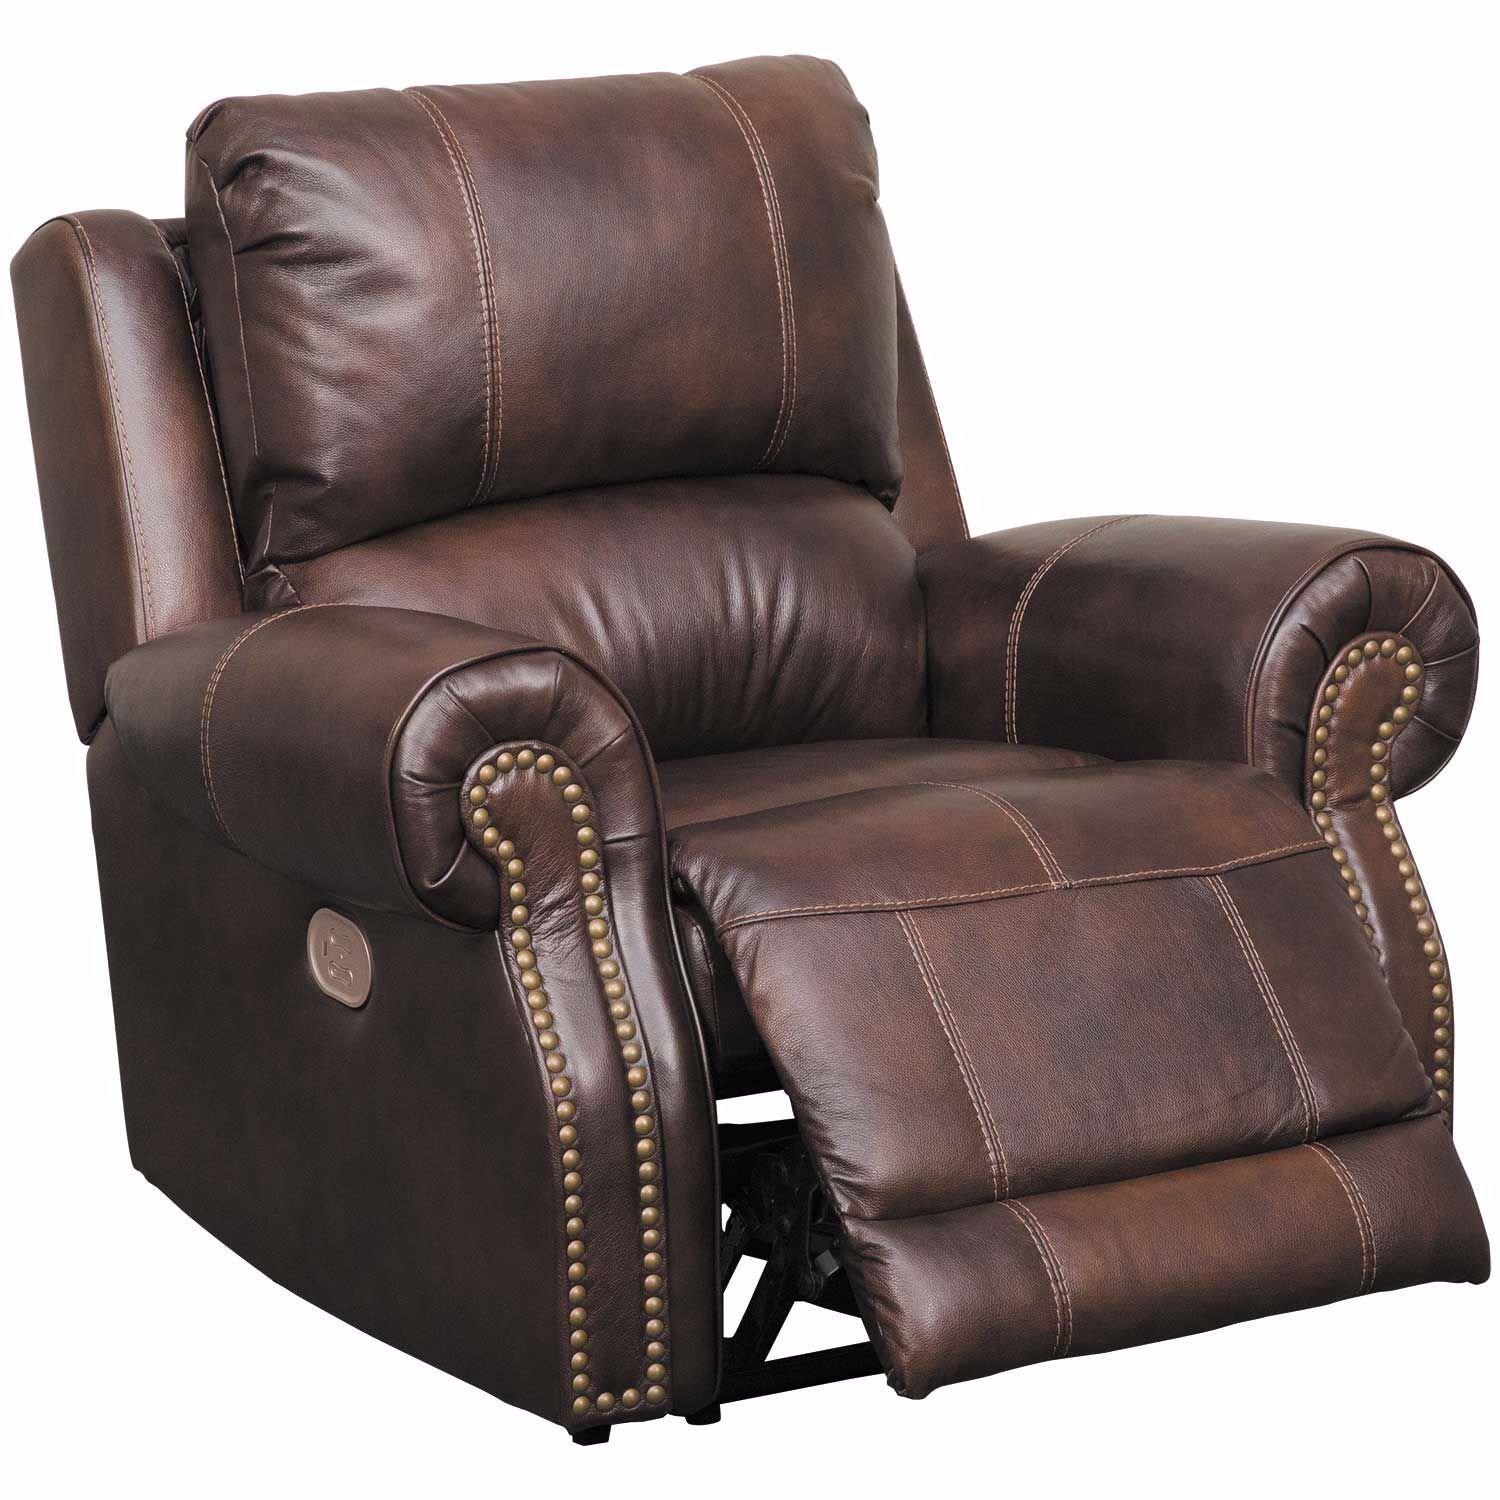 https://www.afw.com/images/thumbs/0104978_0104978_buncrana-italian-leather-power-recliner-with-adjustable-headrest.jpeg.jpeg